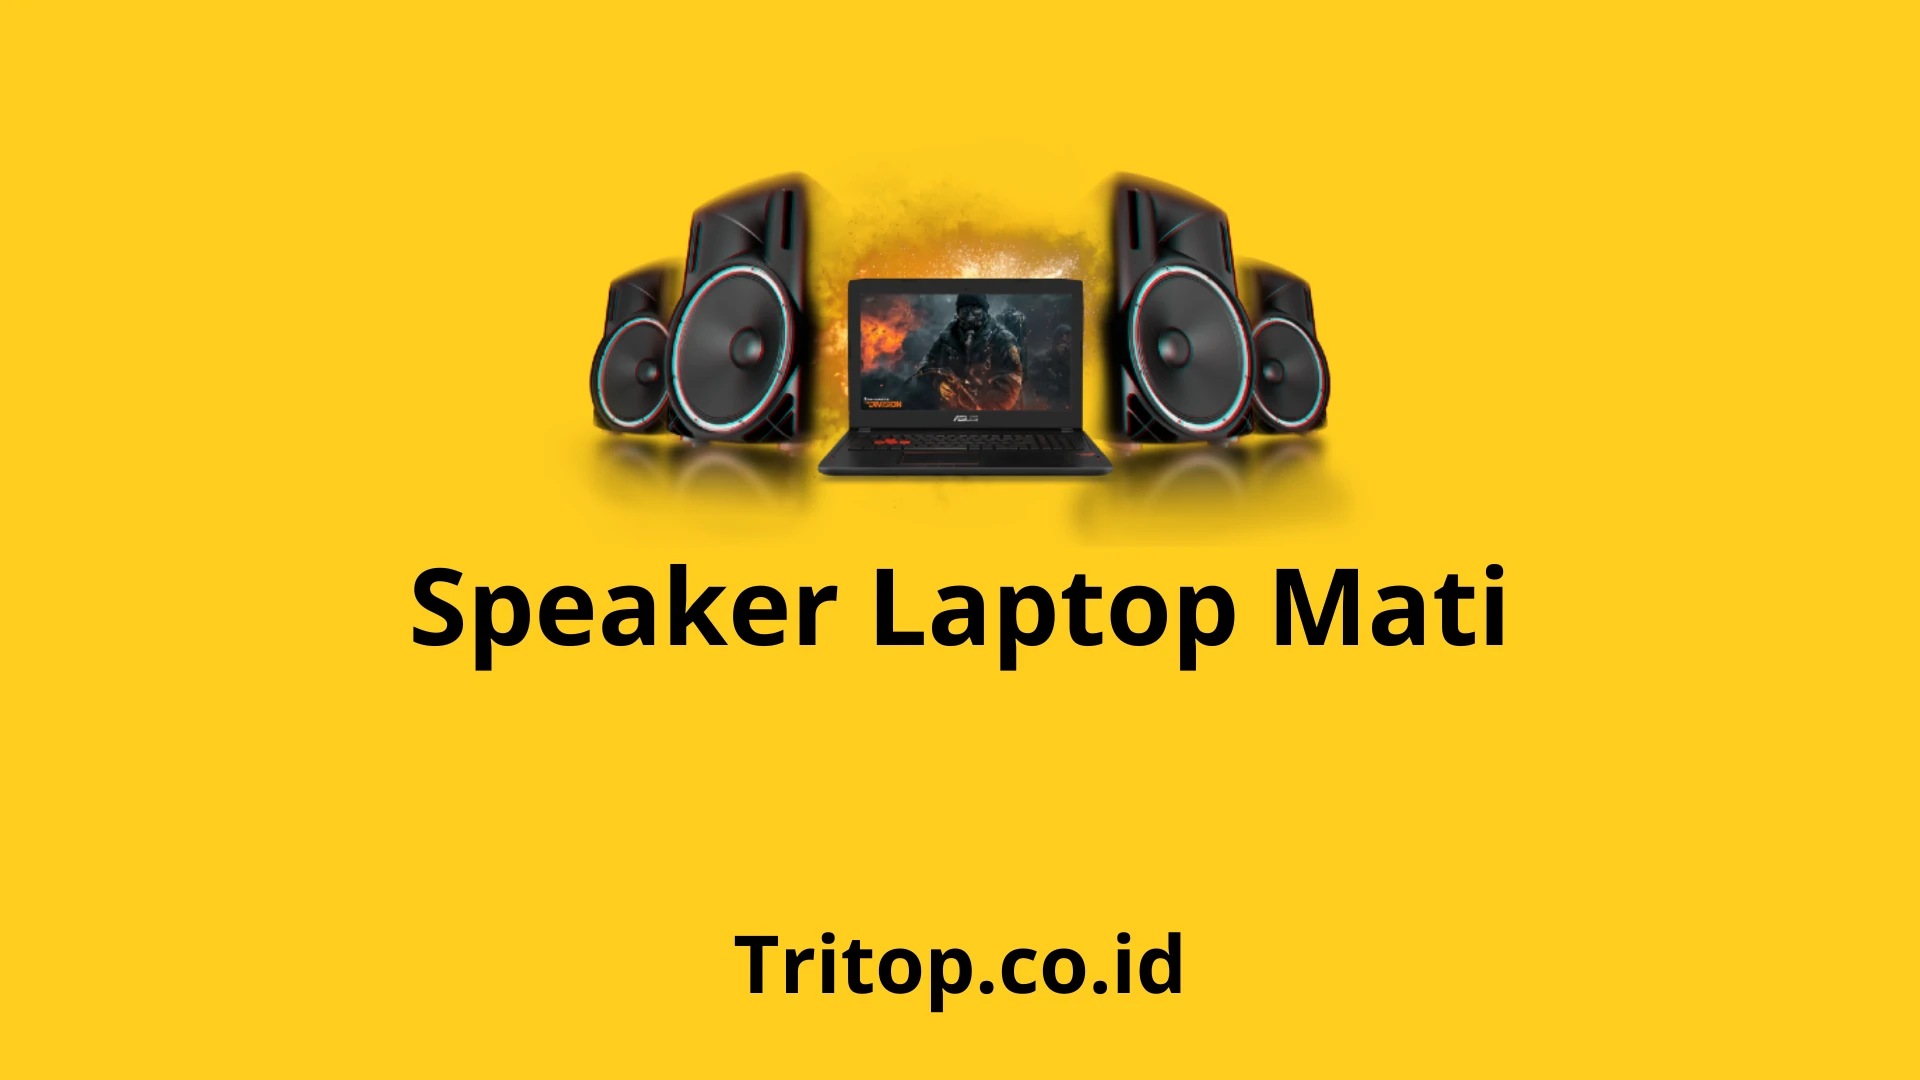 Speaker Laptop Mati Tritop.co.id